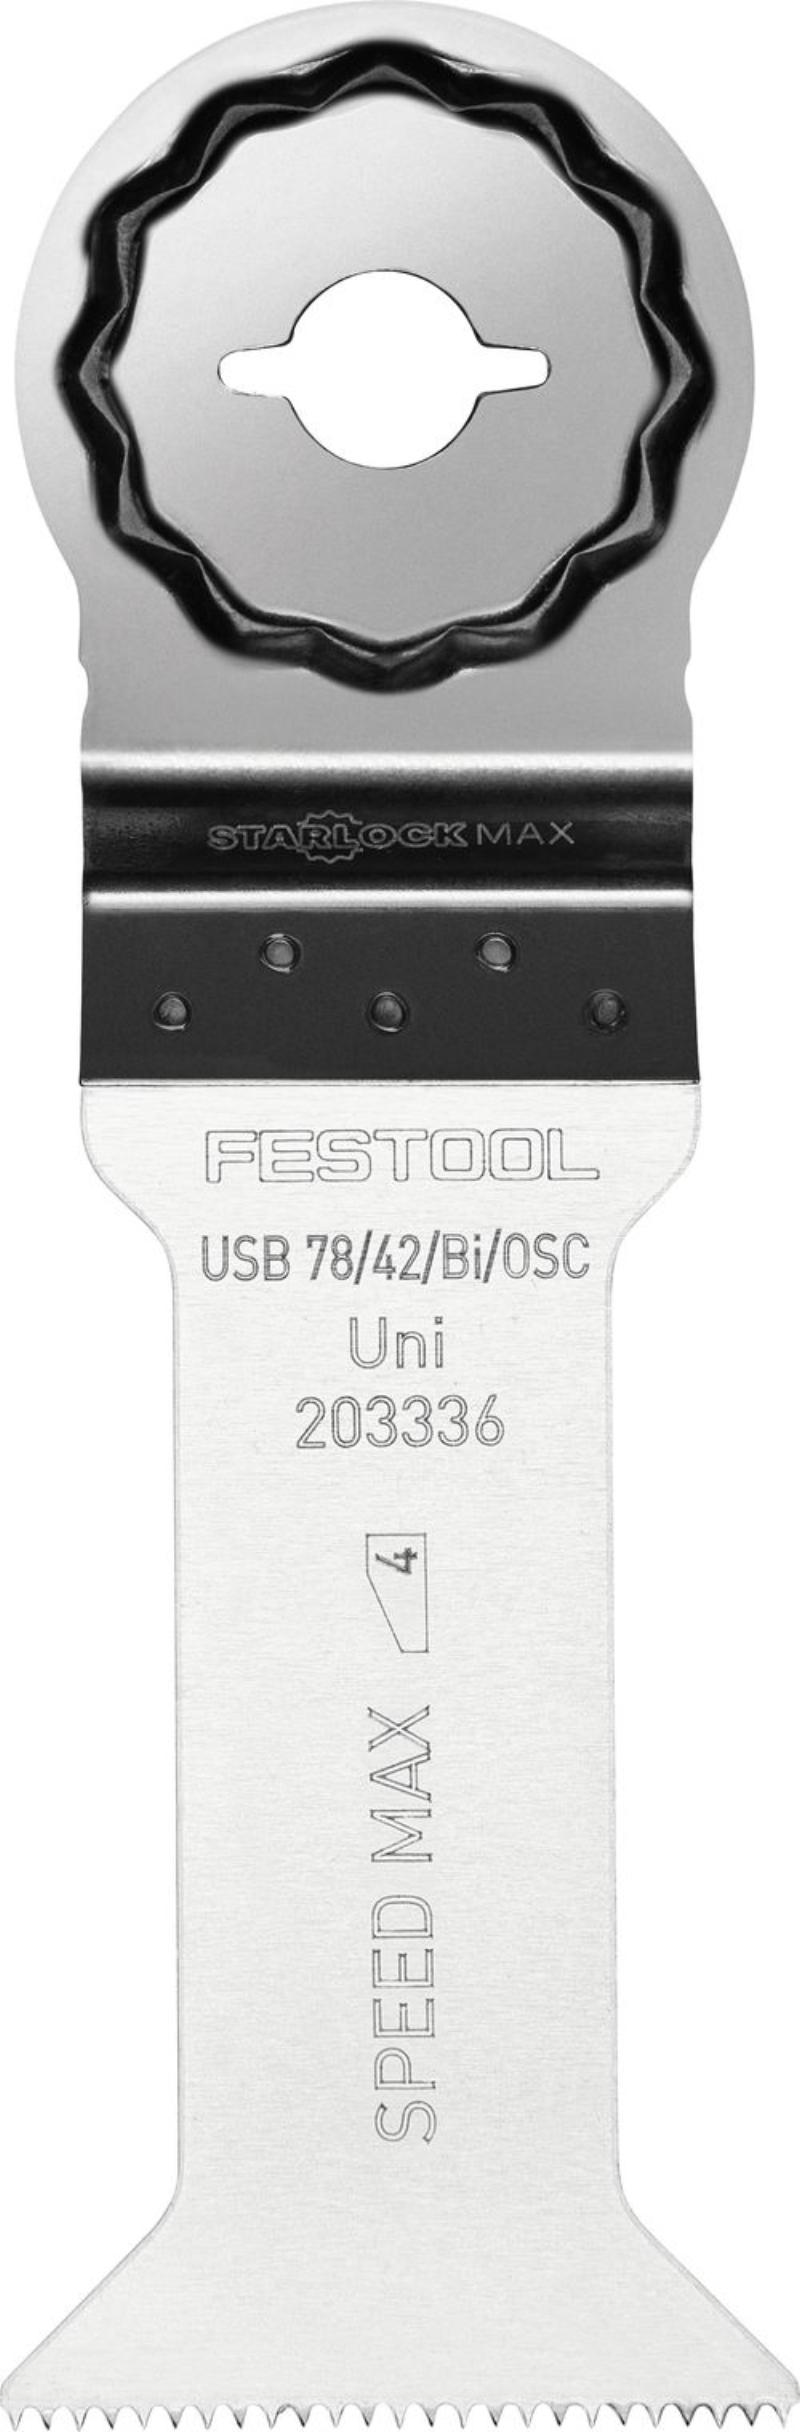 Festool Universal-Sägeblatt USB 78/42/Bi/OSC, 1 St